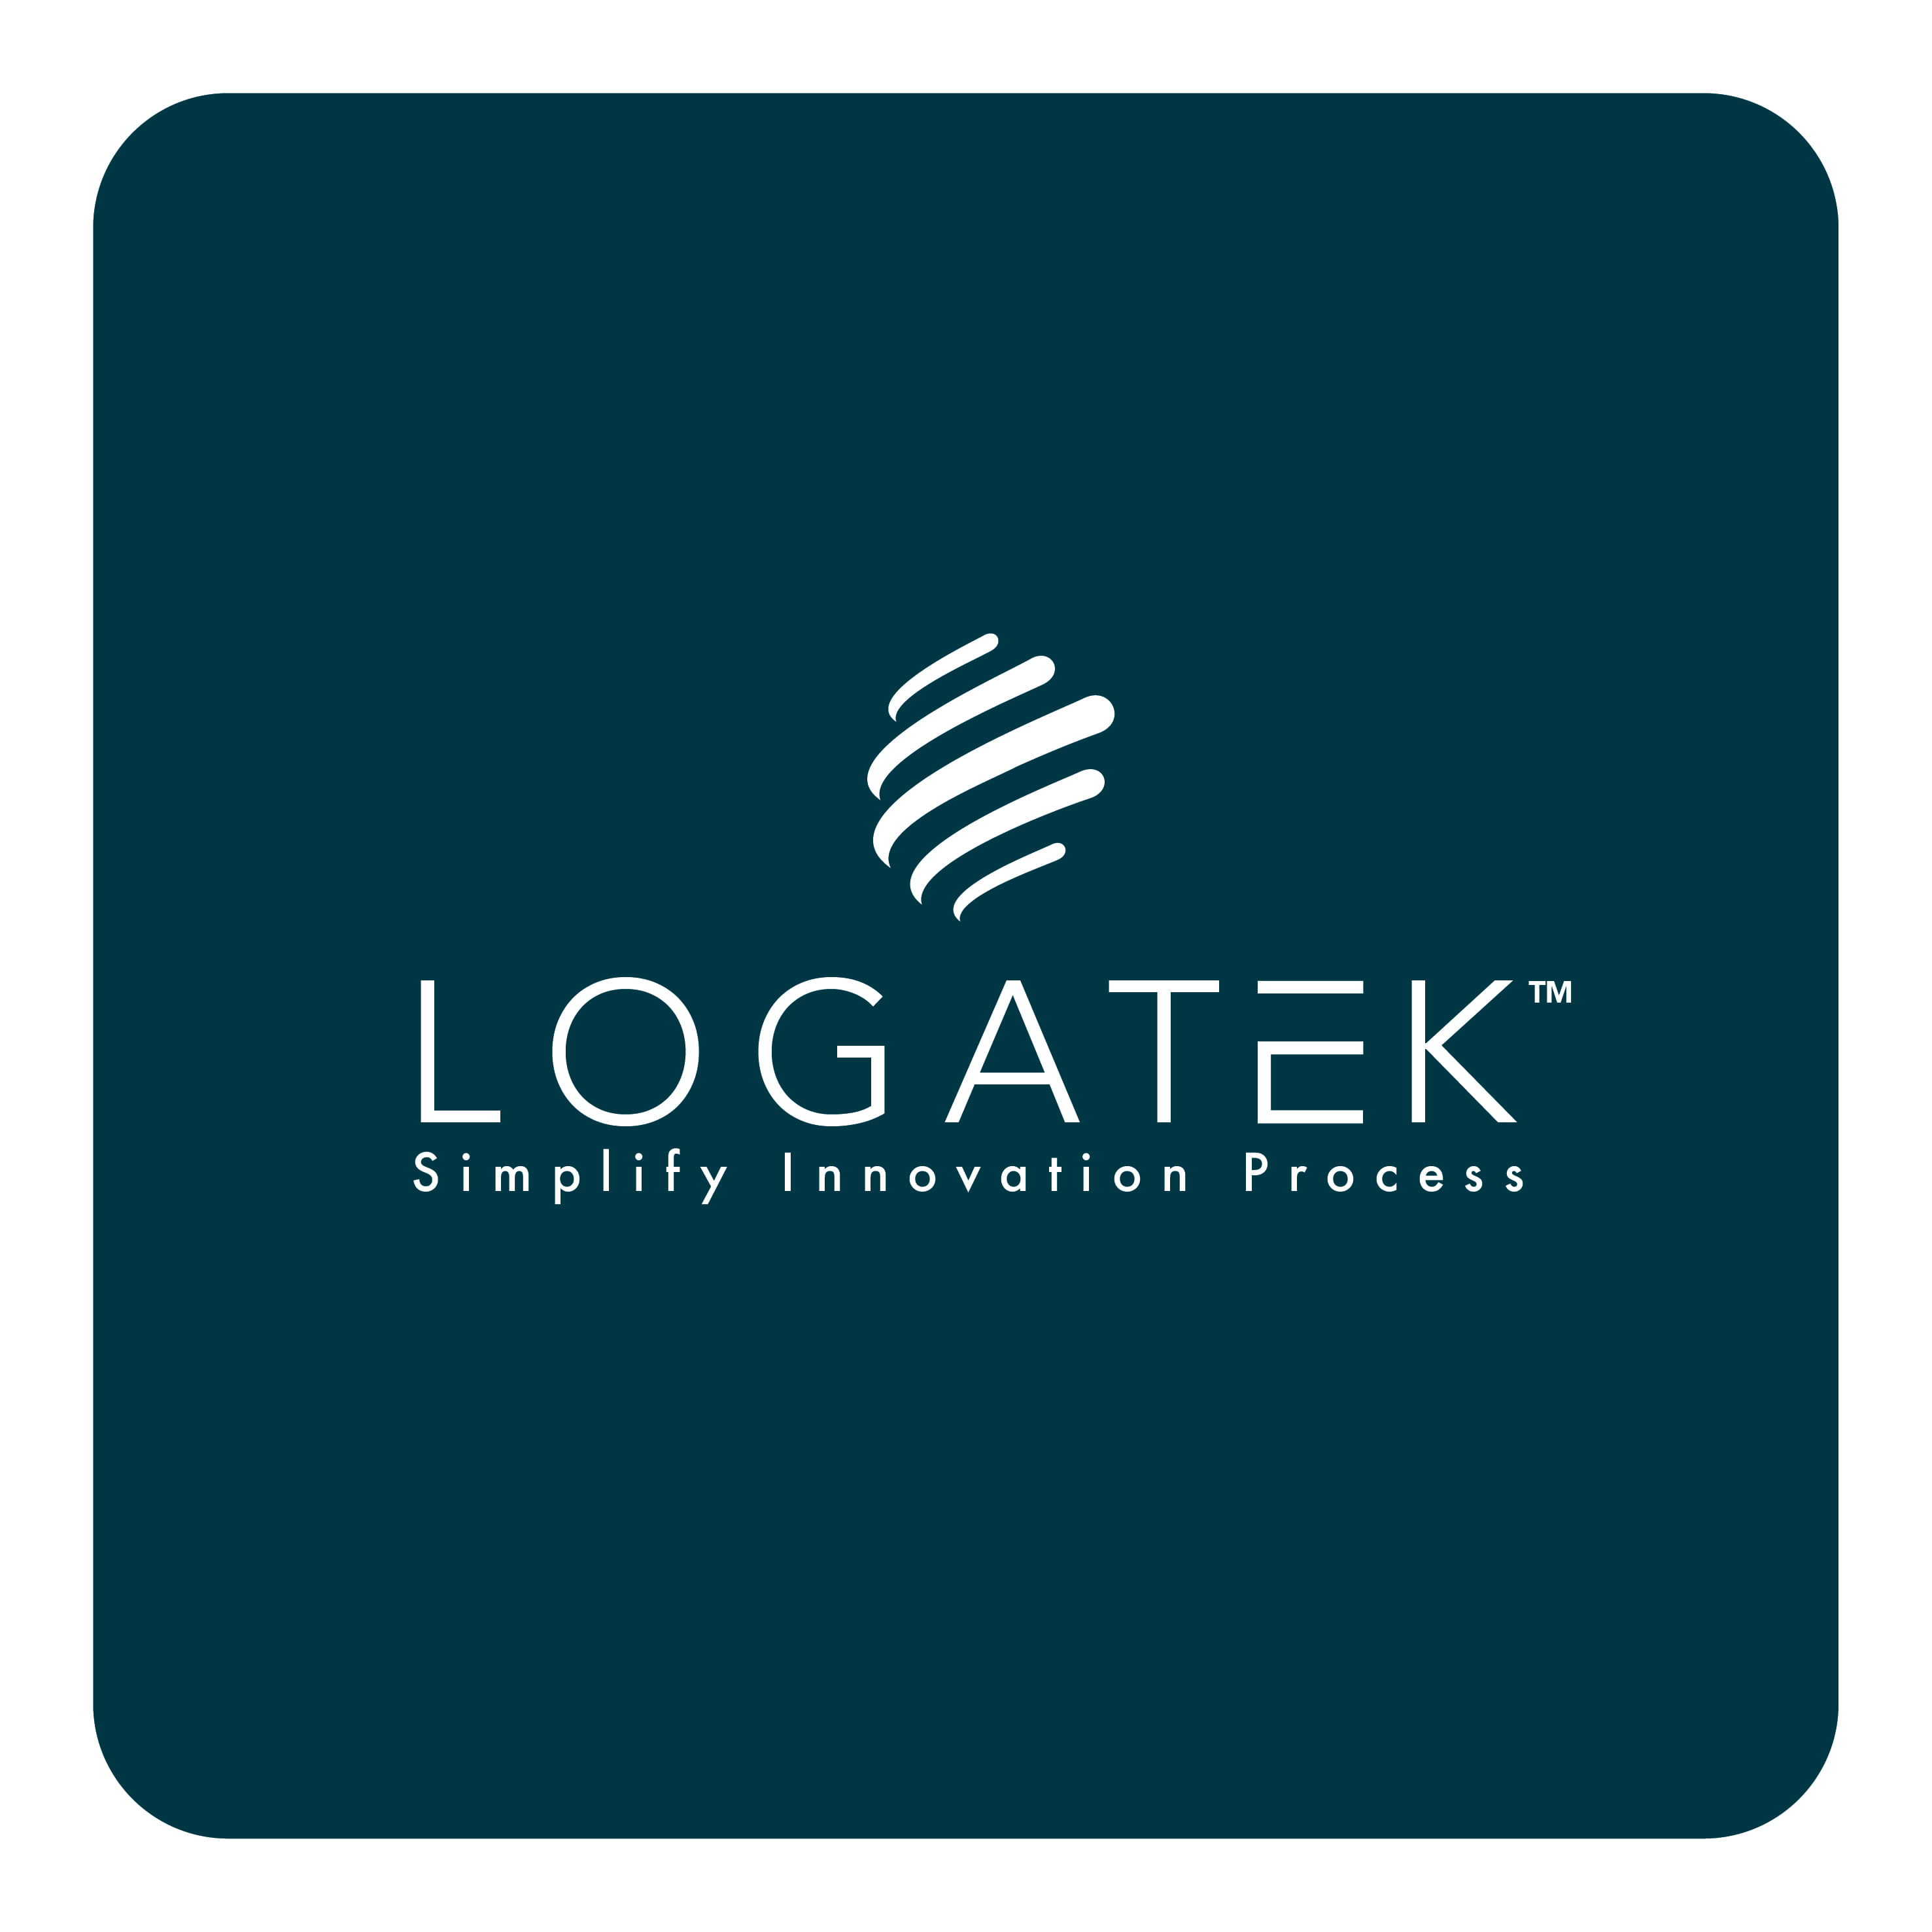 Logatek a ComuniKart 2021, Soluzioni di Stampa in Ambito Office e Production